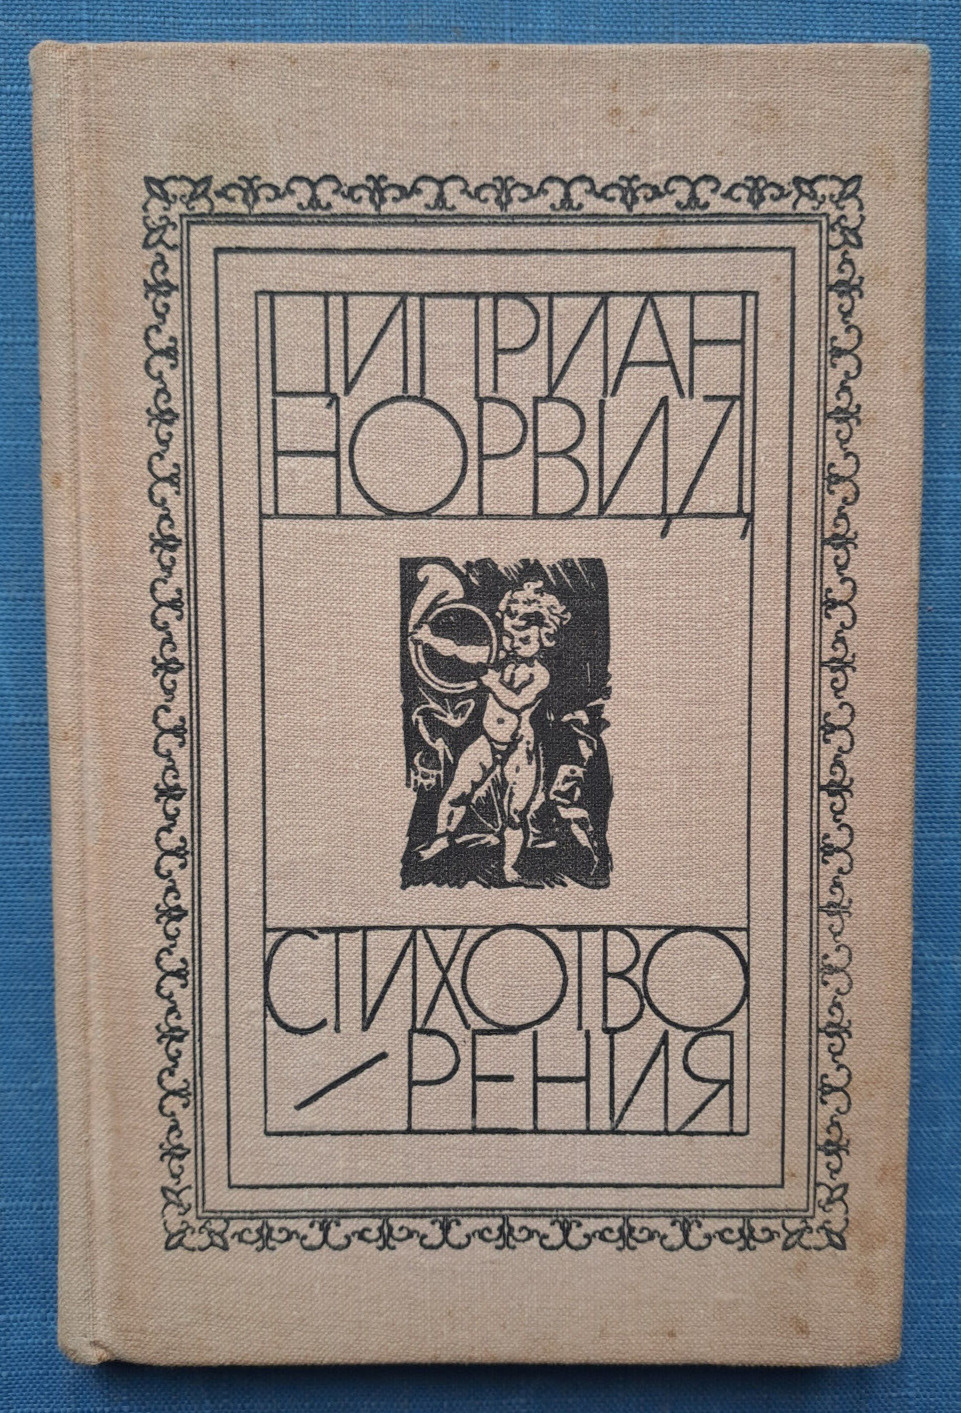 1972 Joseph Brodsky Latest publication in USSR Ciprian Norwid rare Russian book